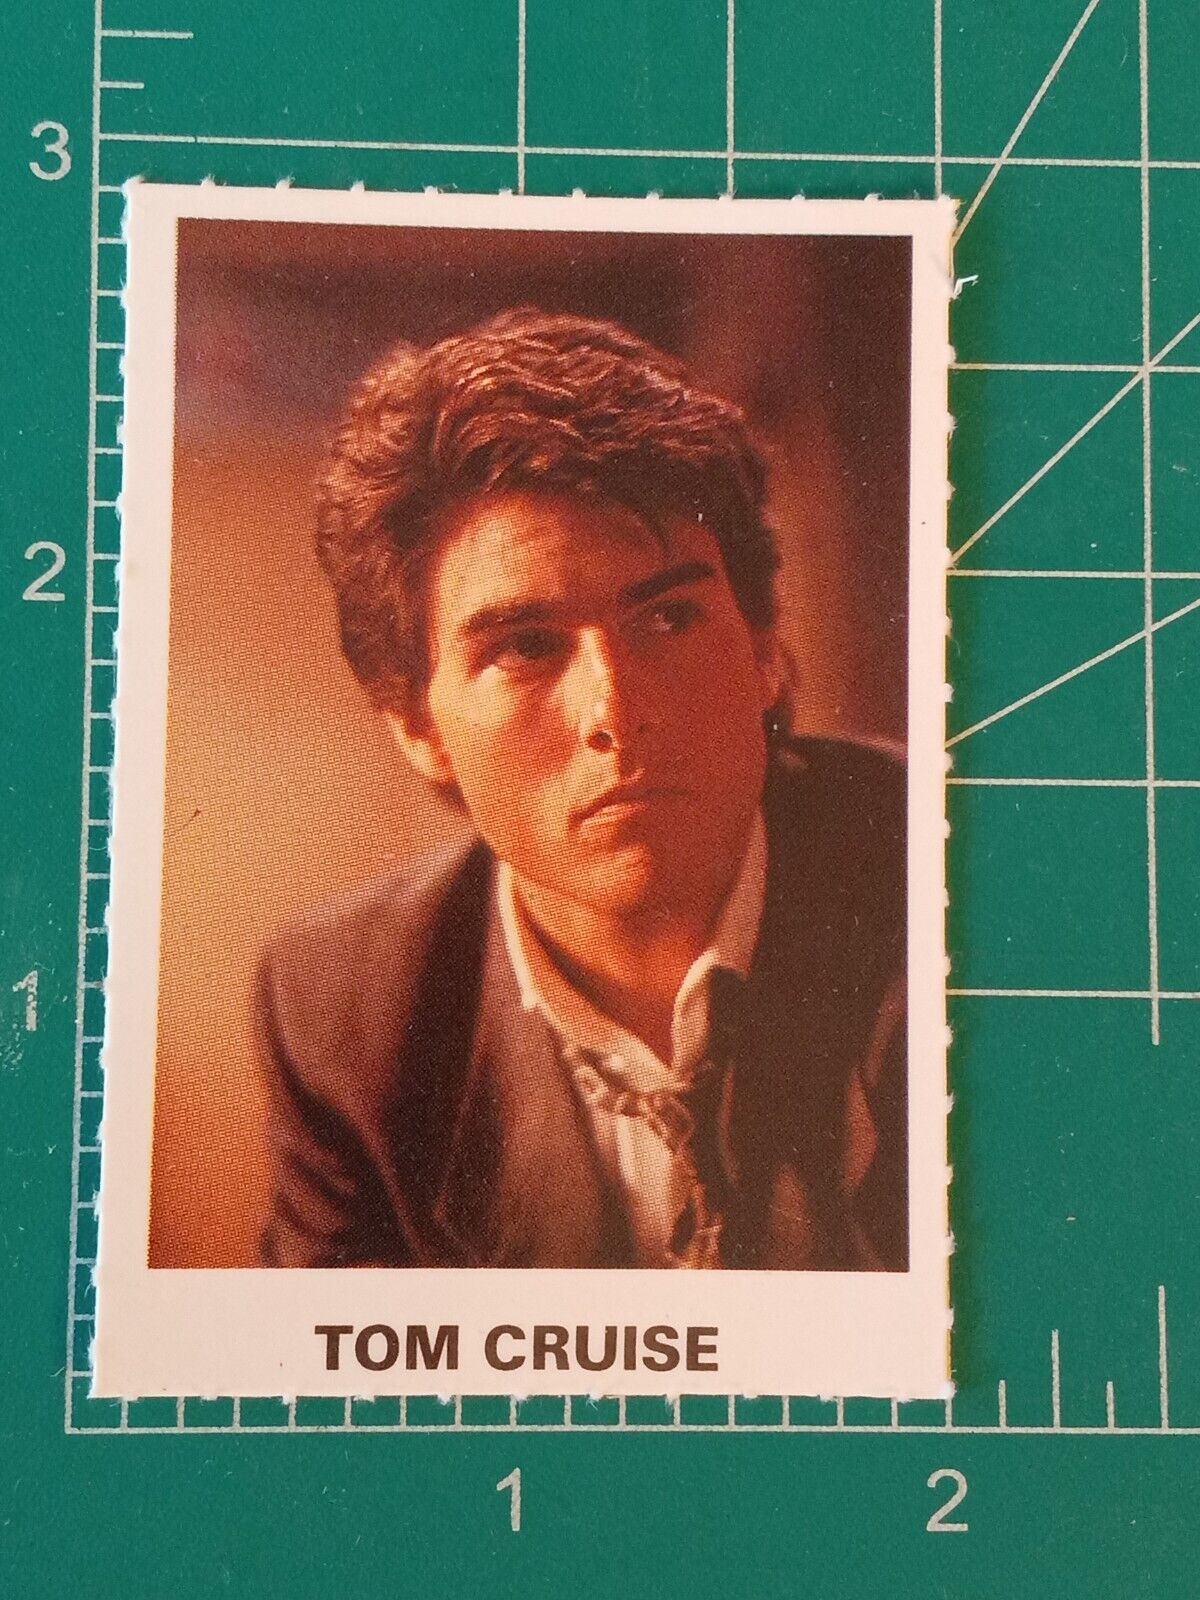 TOM CRUISE rare 1980s Swedish FRIDA pop music & movie magazine insert Card